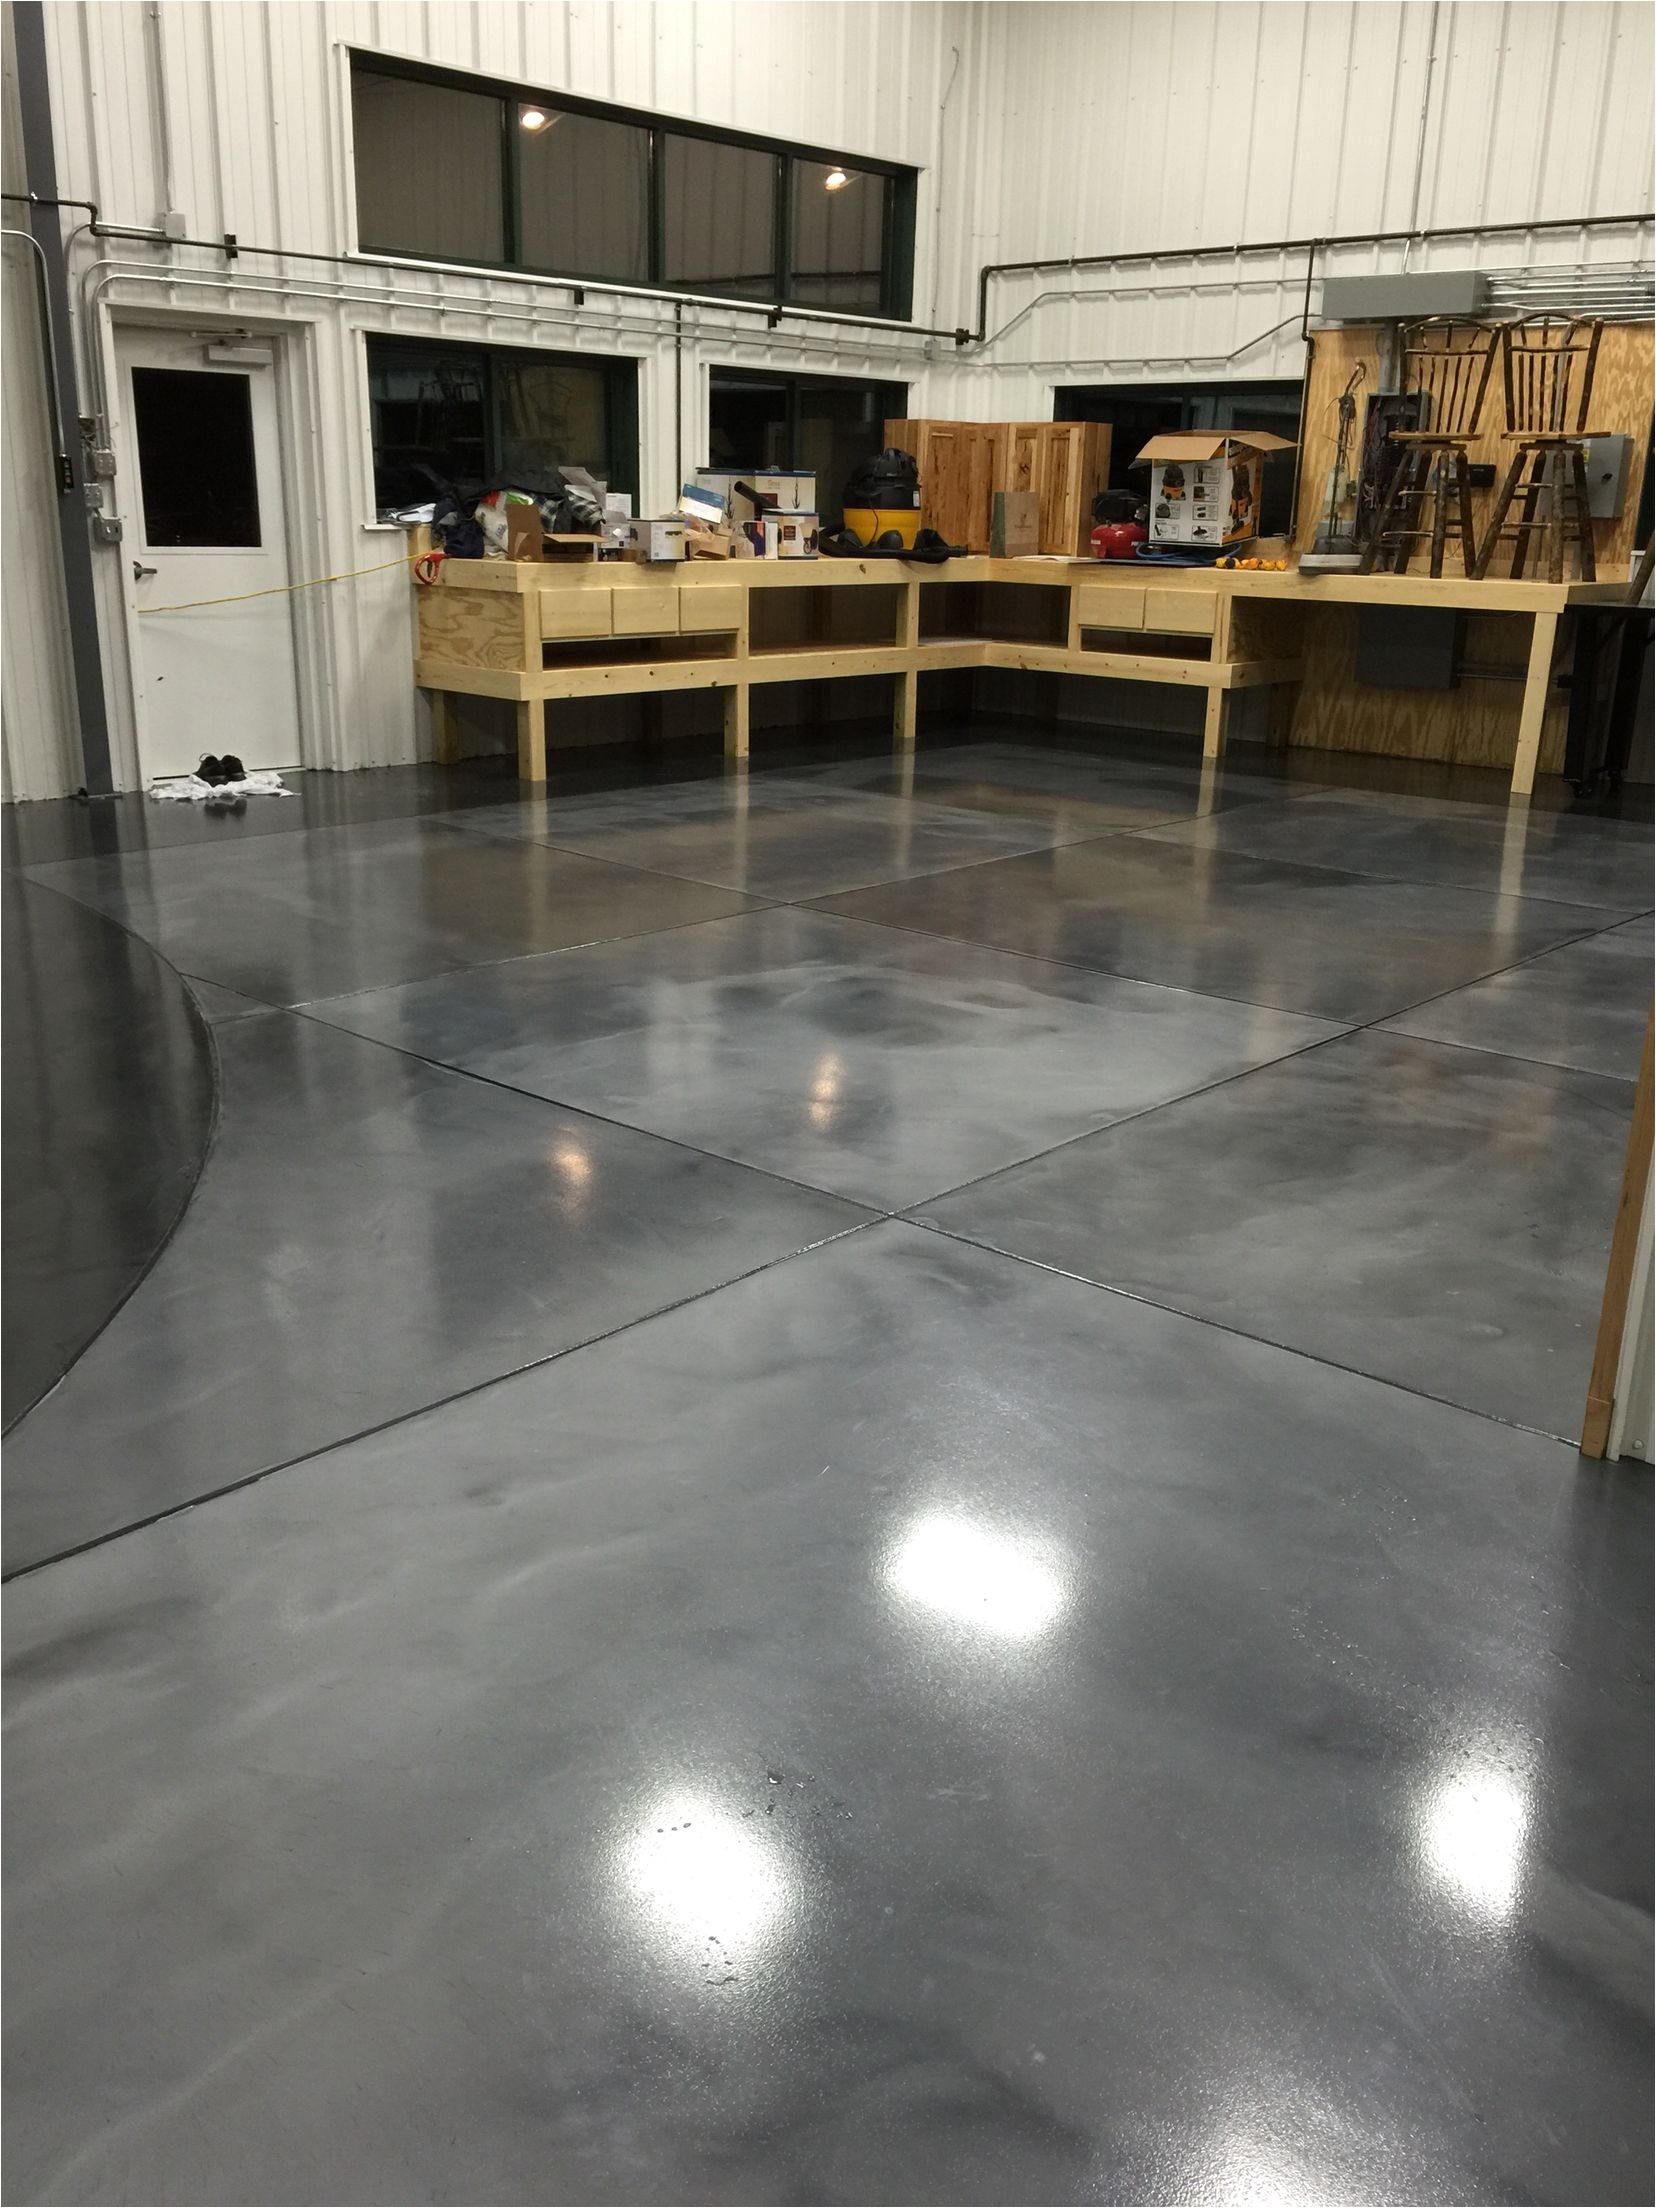 metallic epoxy floor coatings with epoxy grout lines by sierra concrete arts